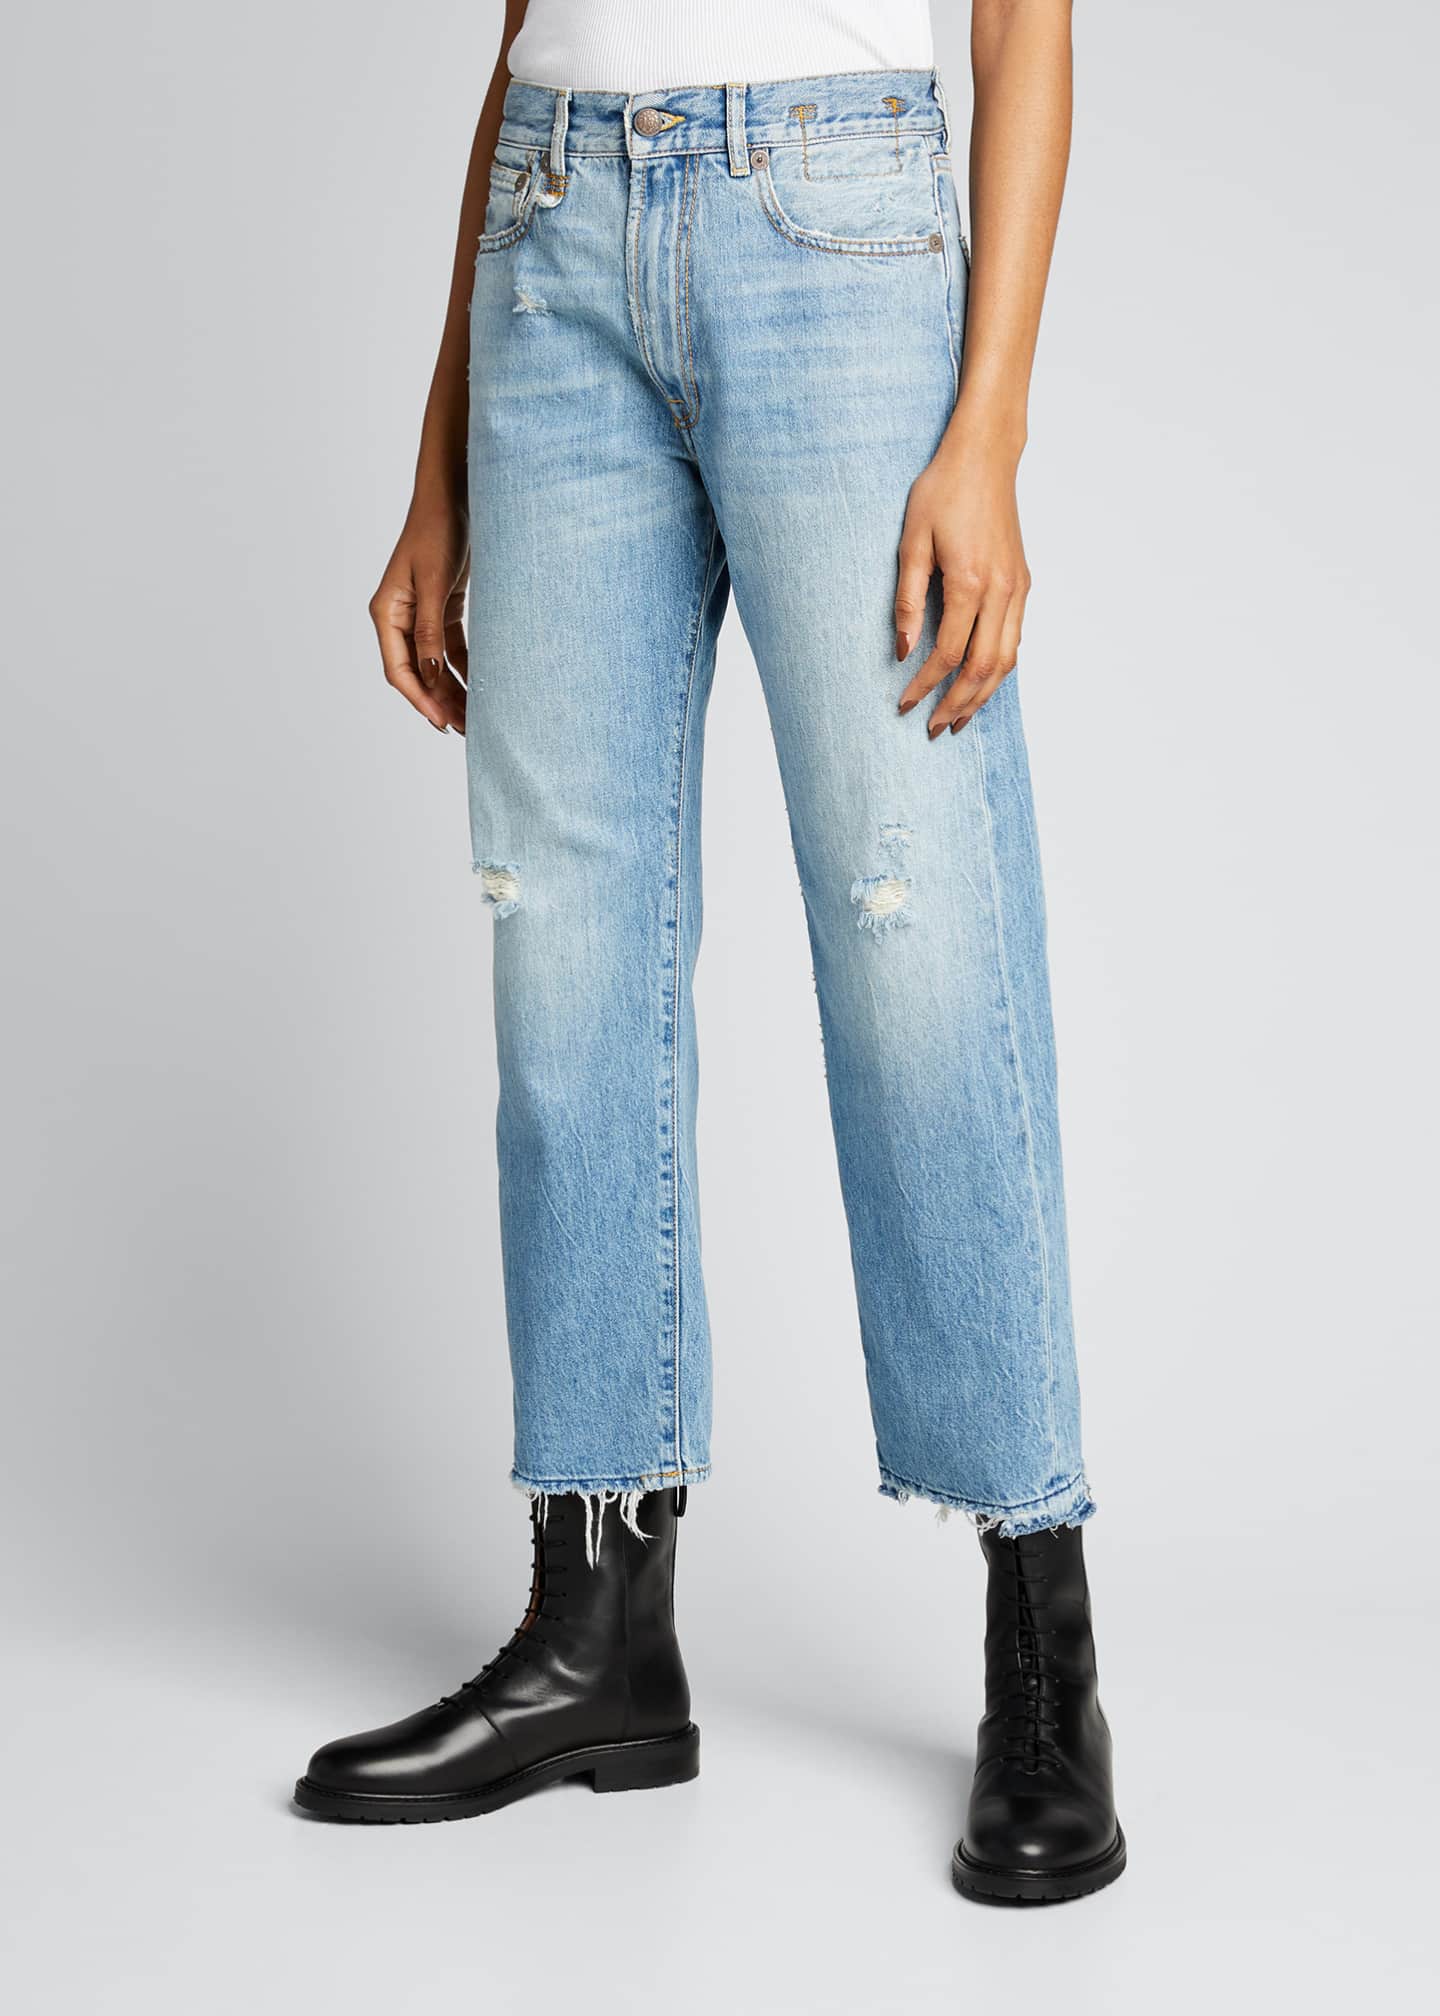 R13 Boyfriend Jeans with Frayed Hem - Bergdorf Goodman